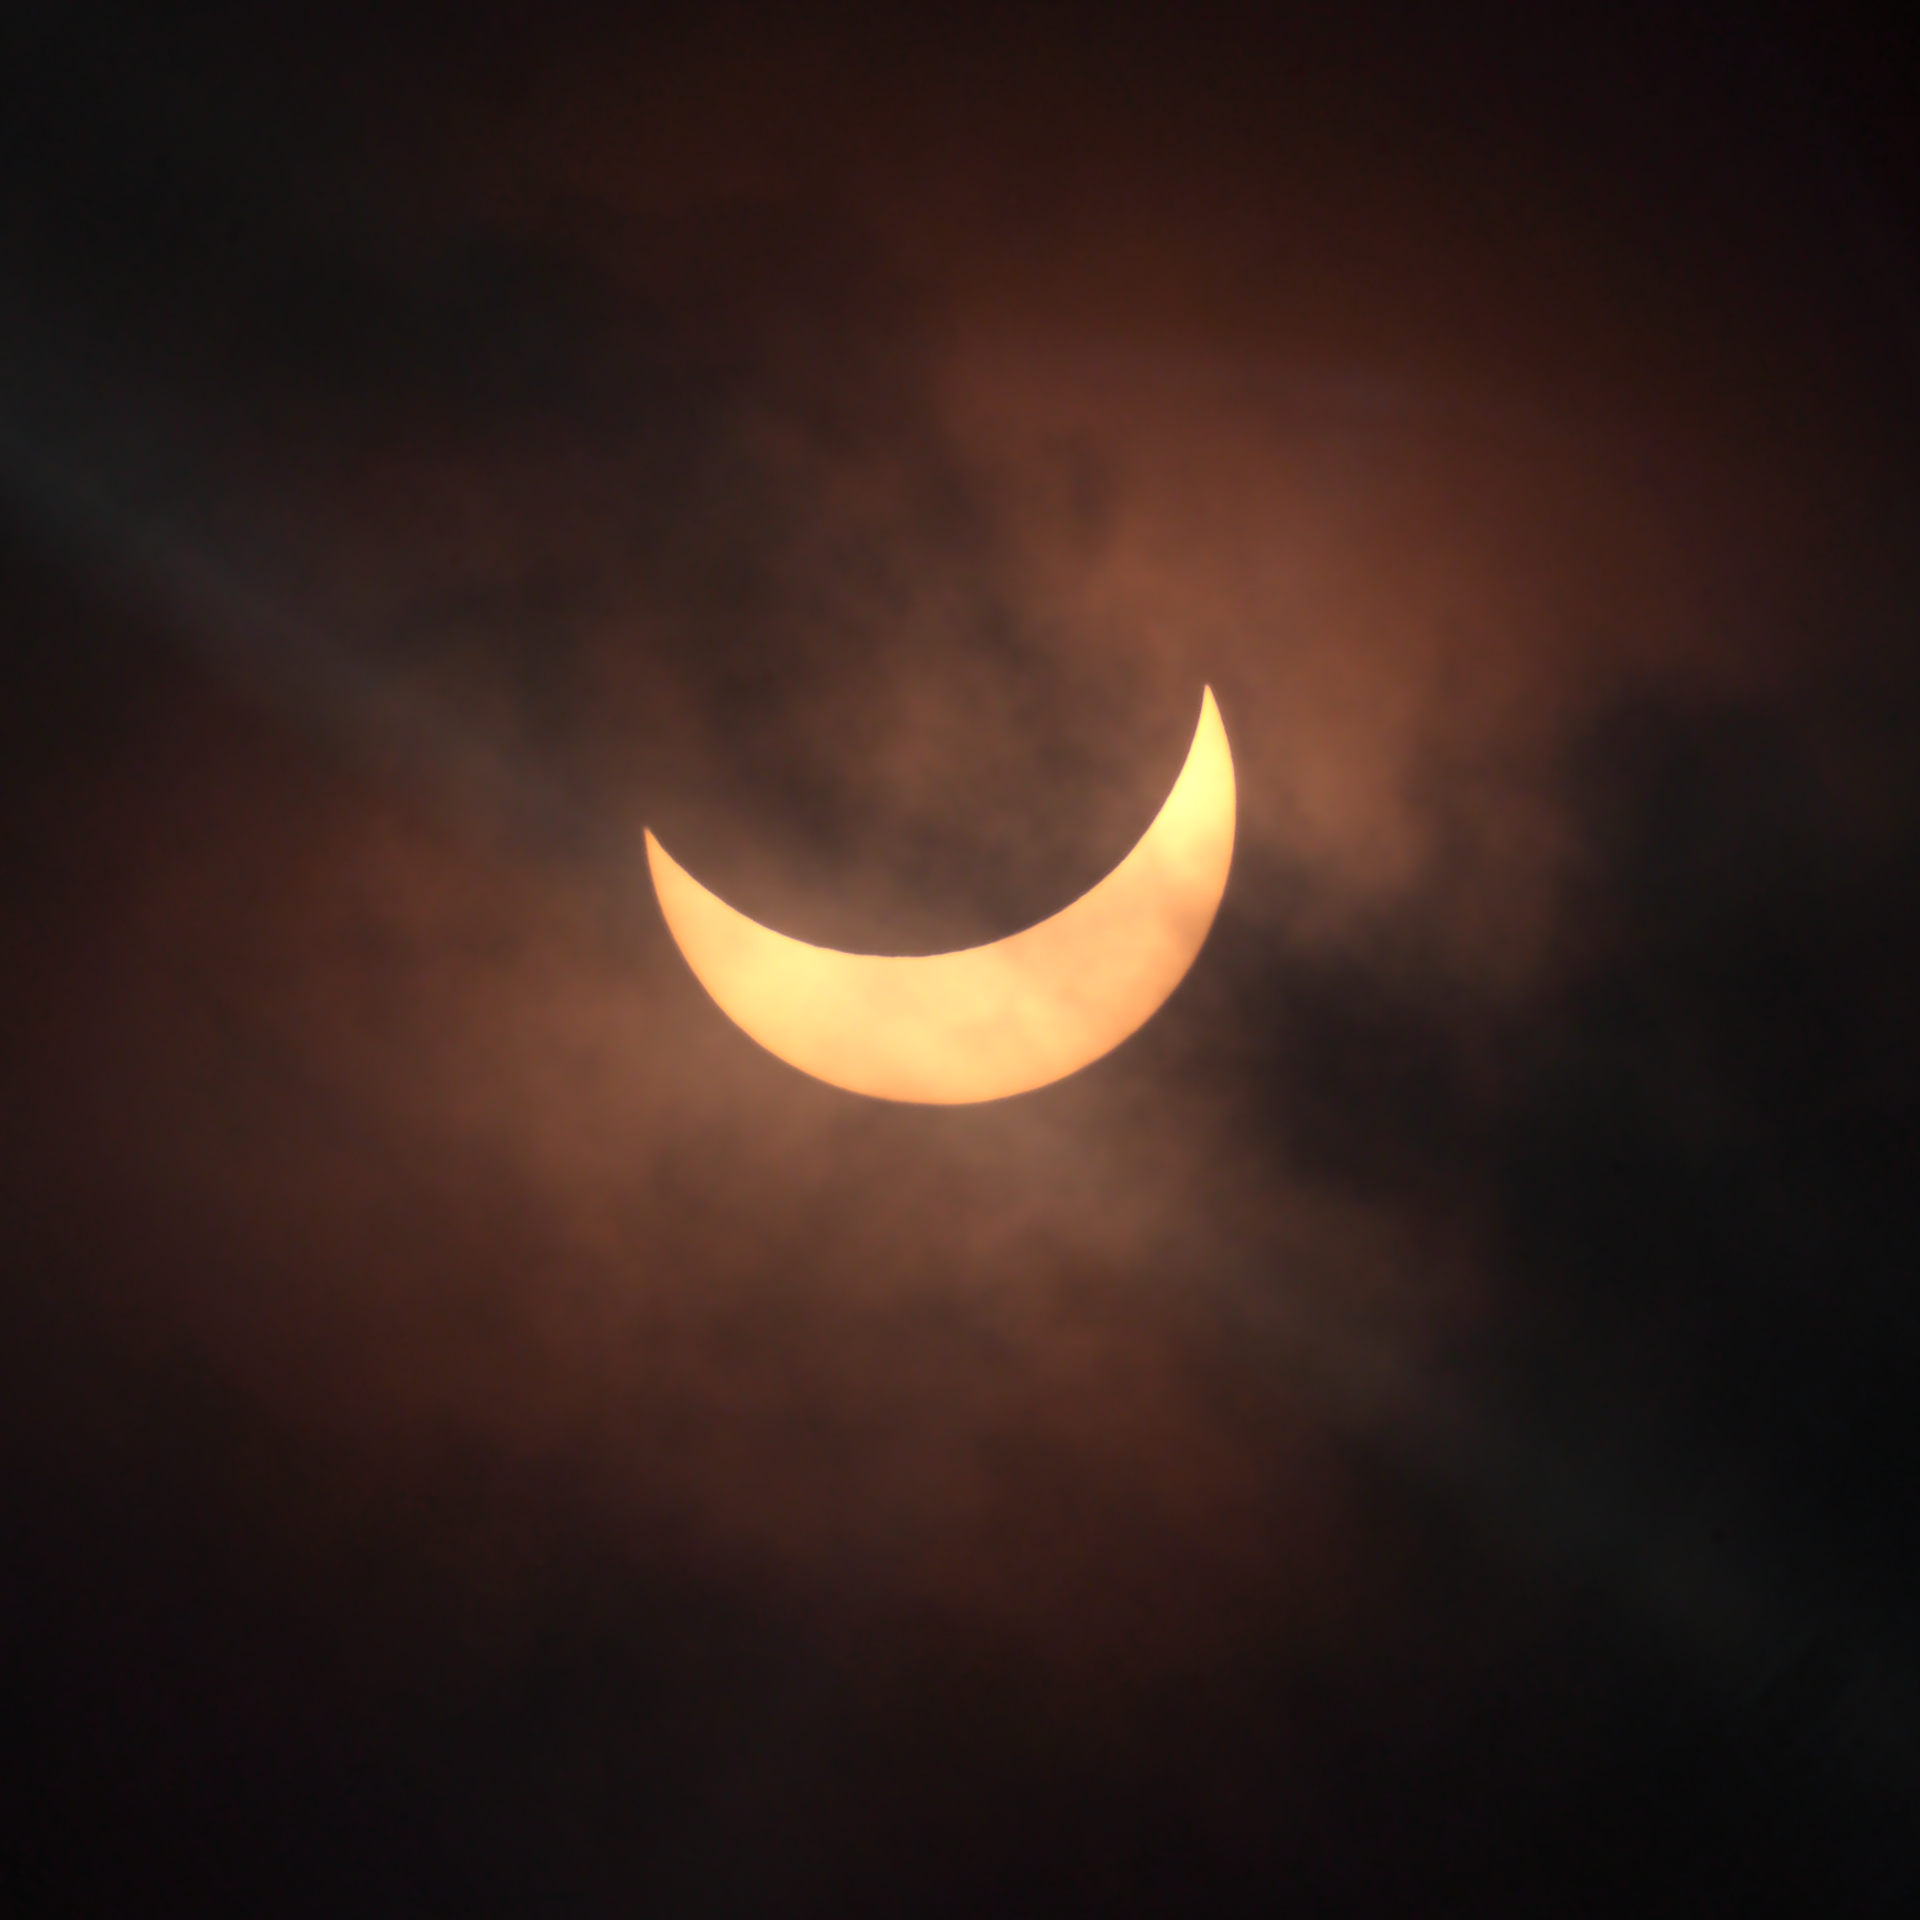 Eclipse Solar 20150320